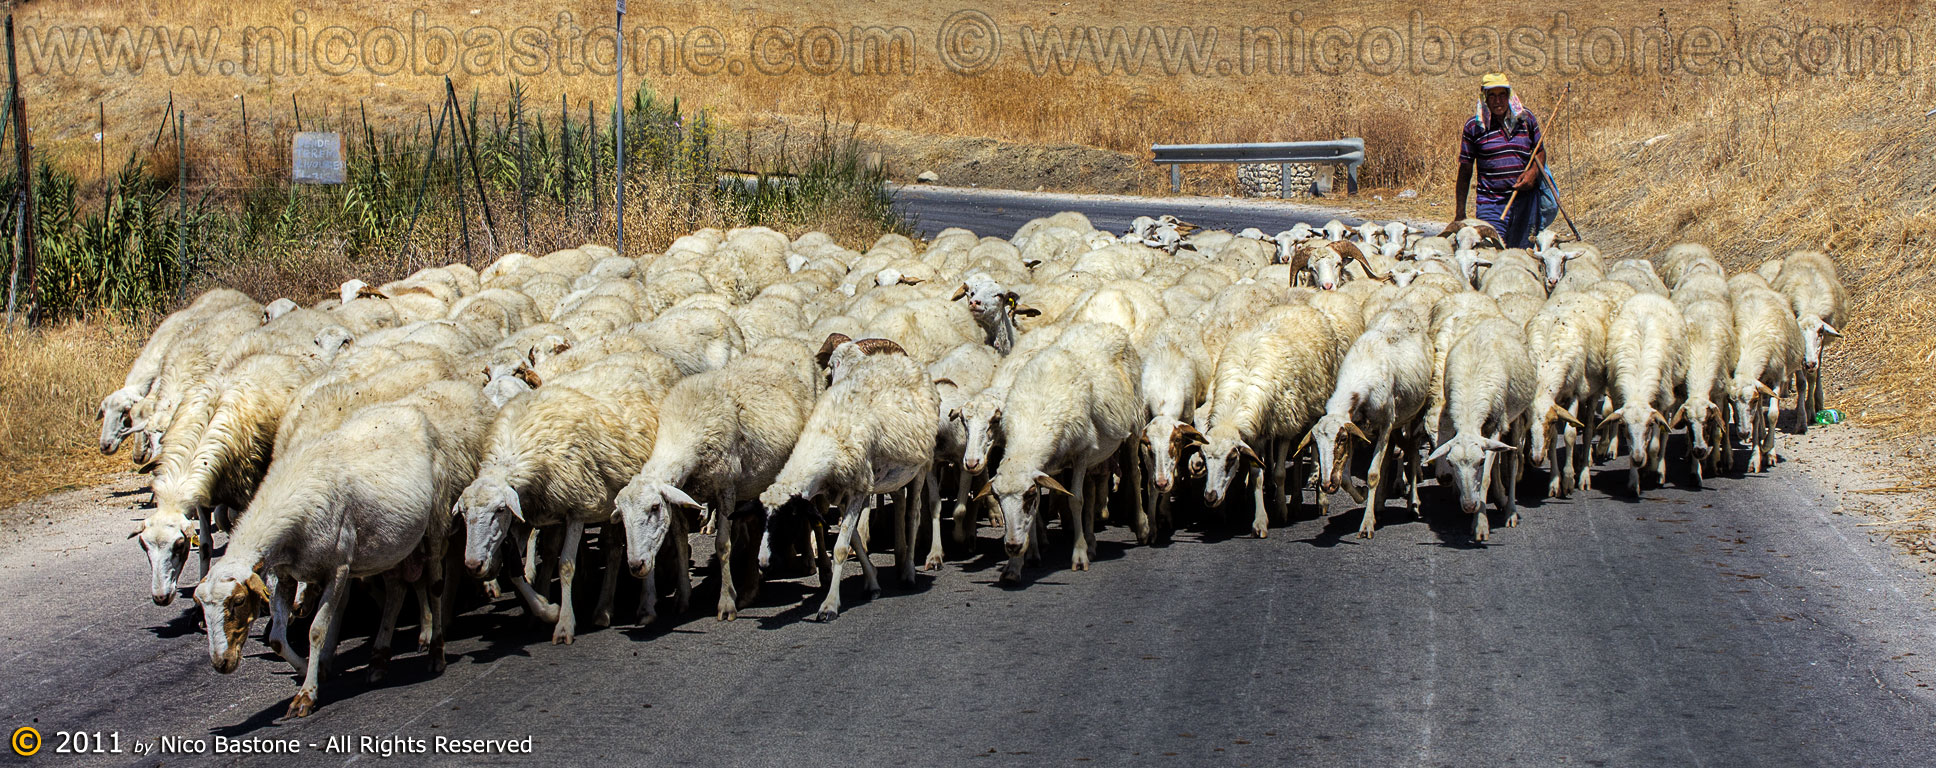 Montallegro AG "Pastore con gregge di pecore - A Shepherd with its flock of sheep" 1936x768